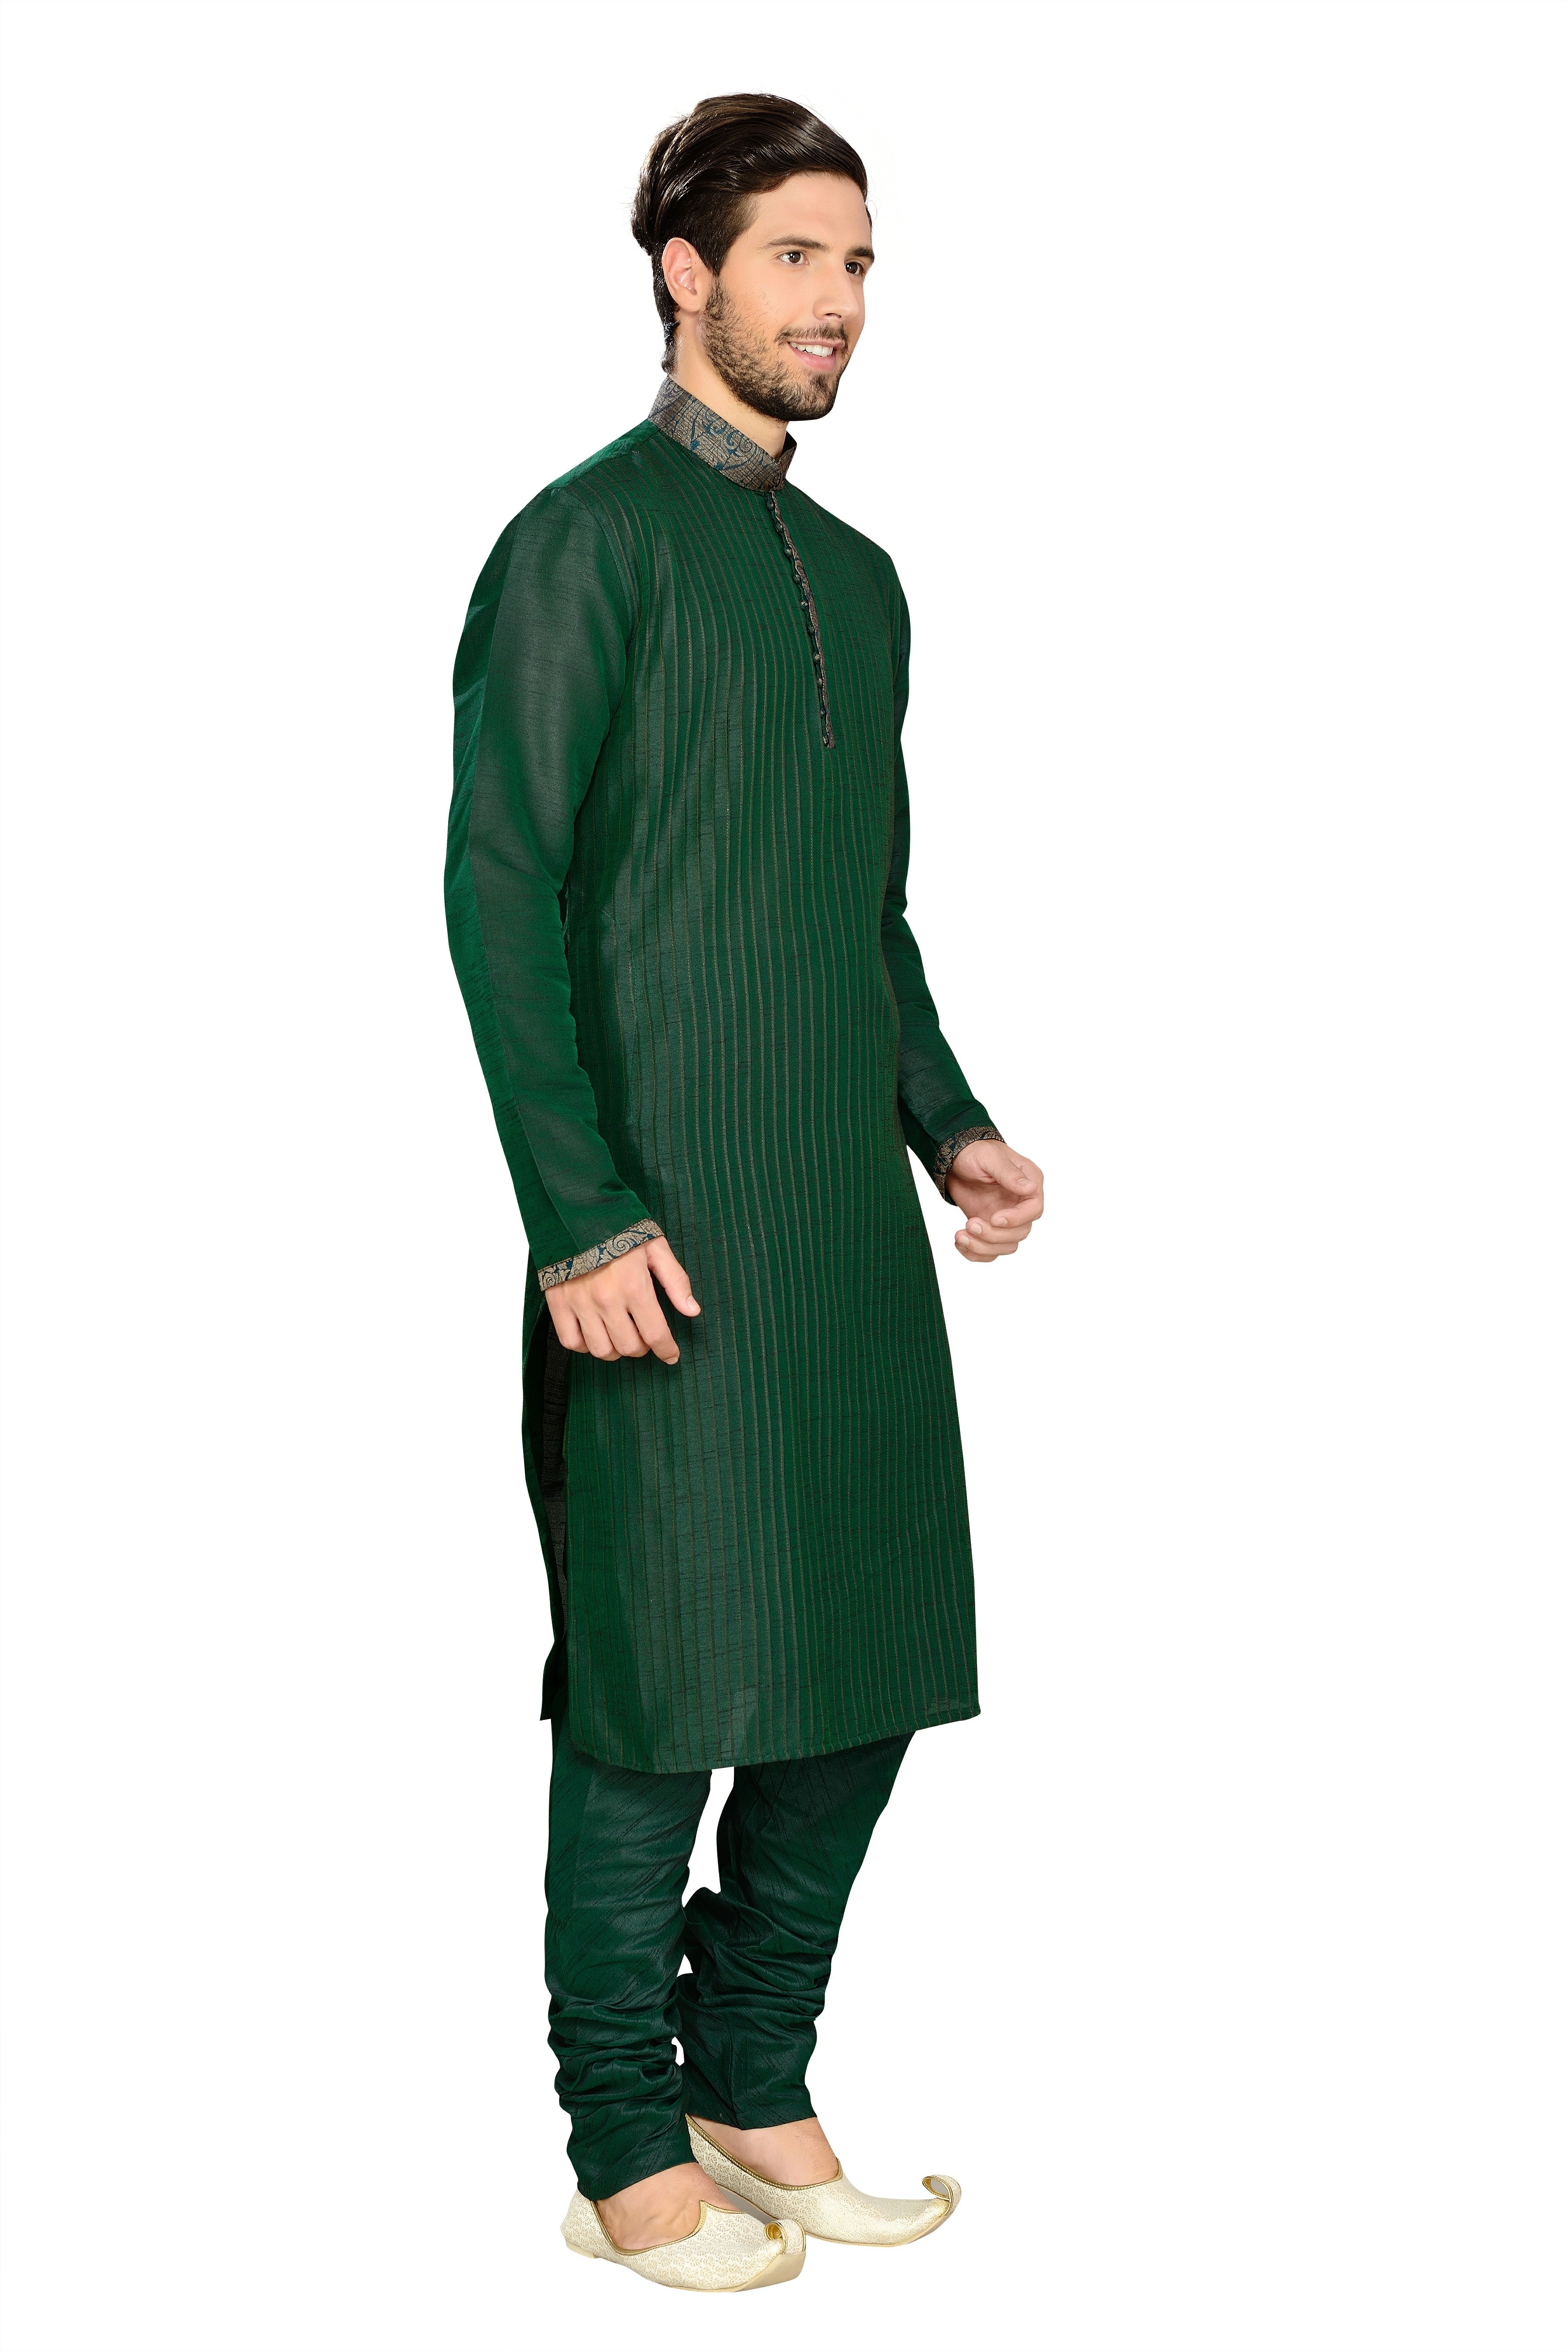 stylish green kurts pyjama for men